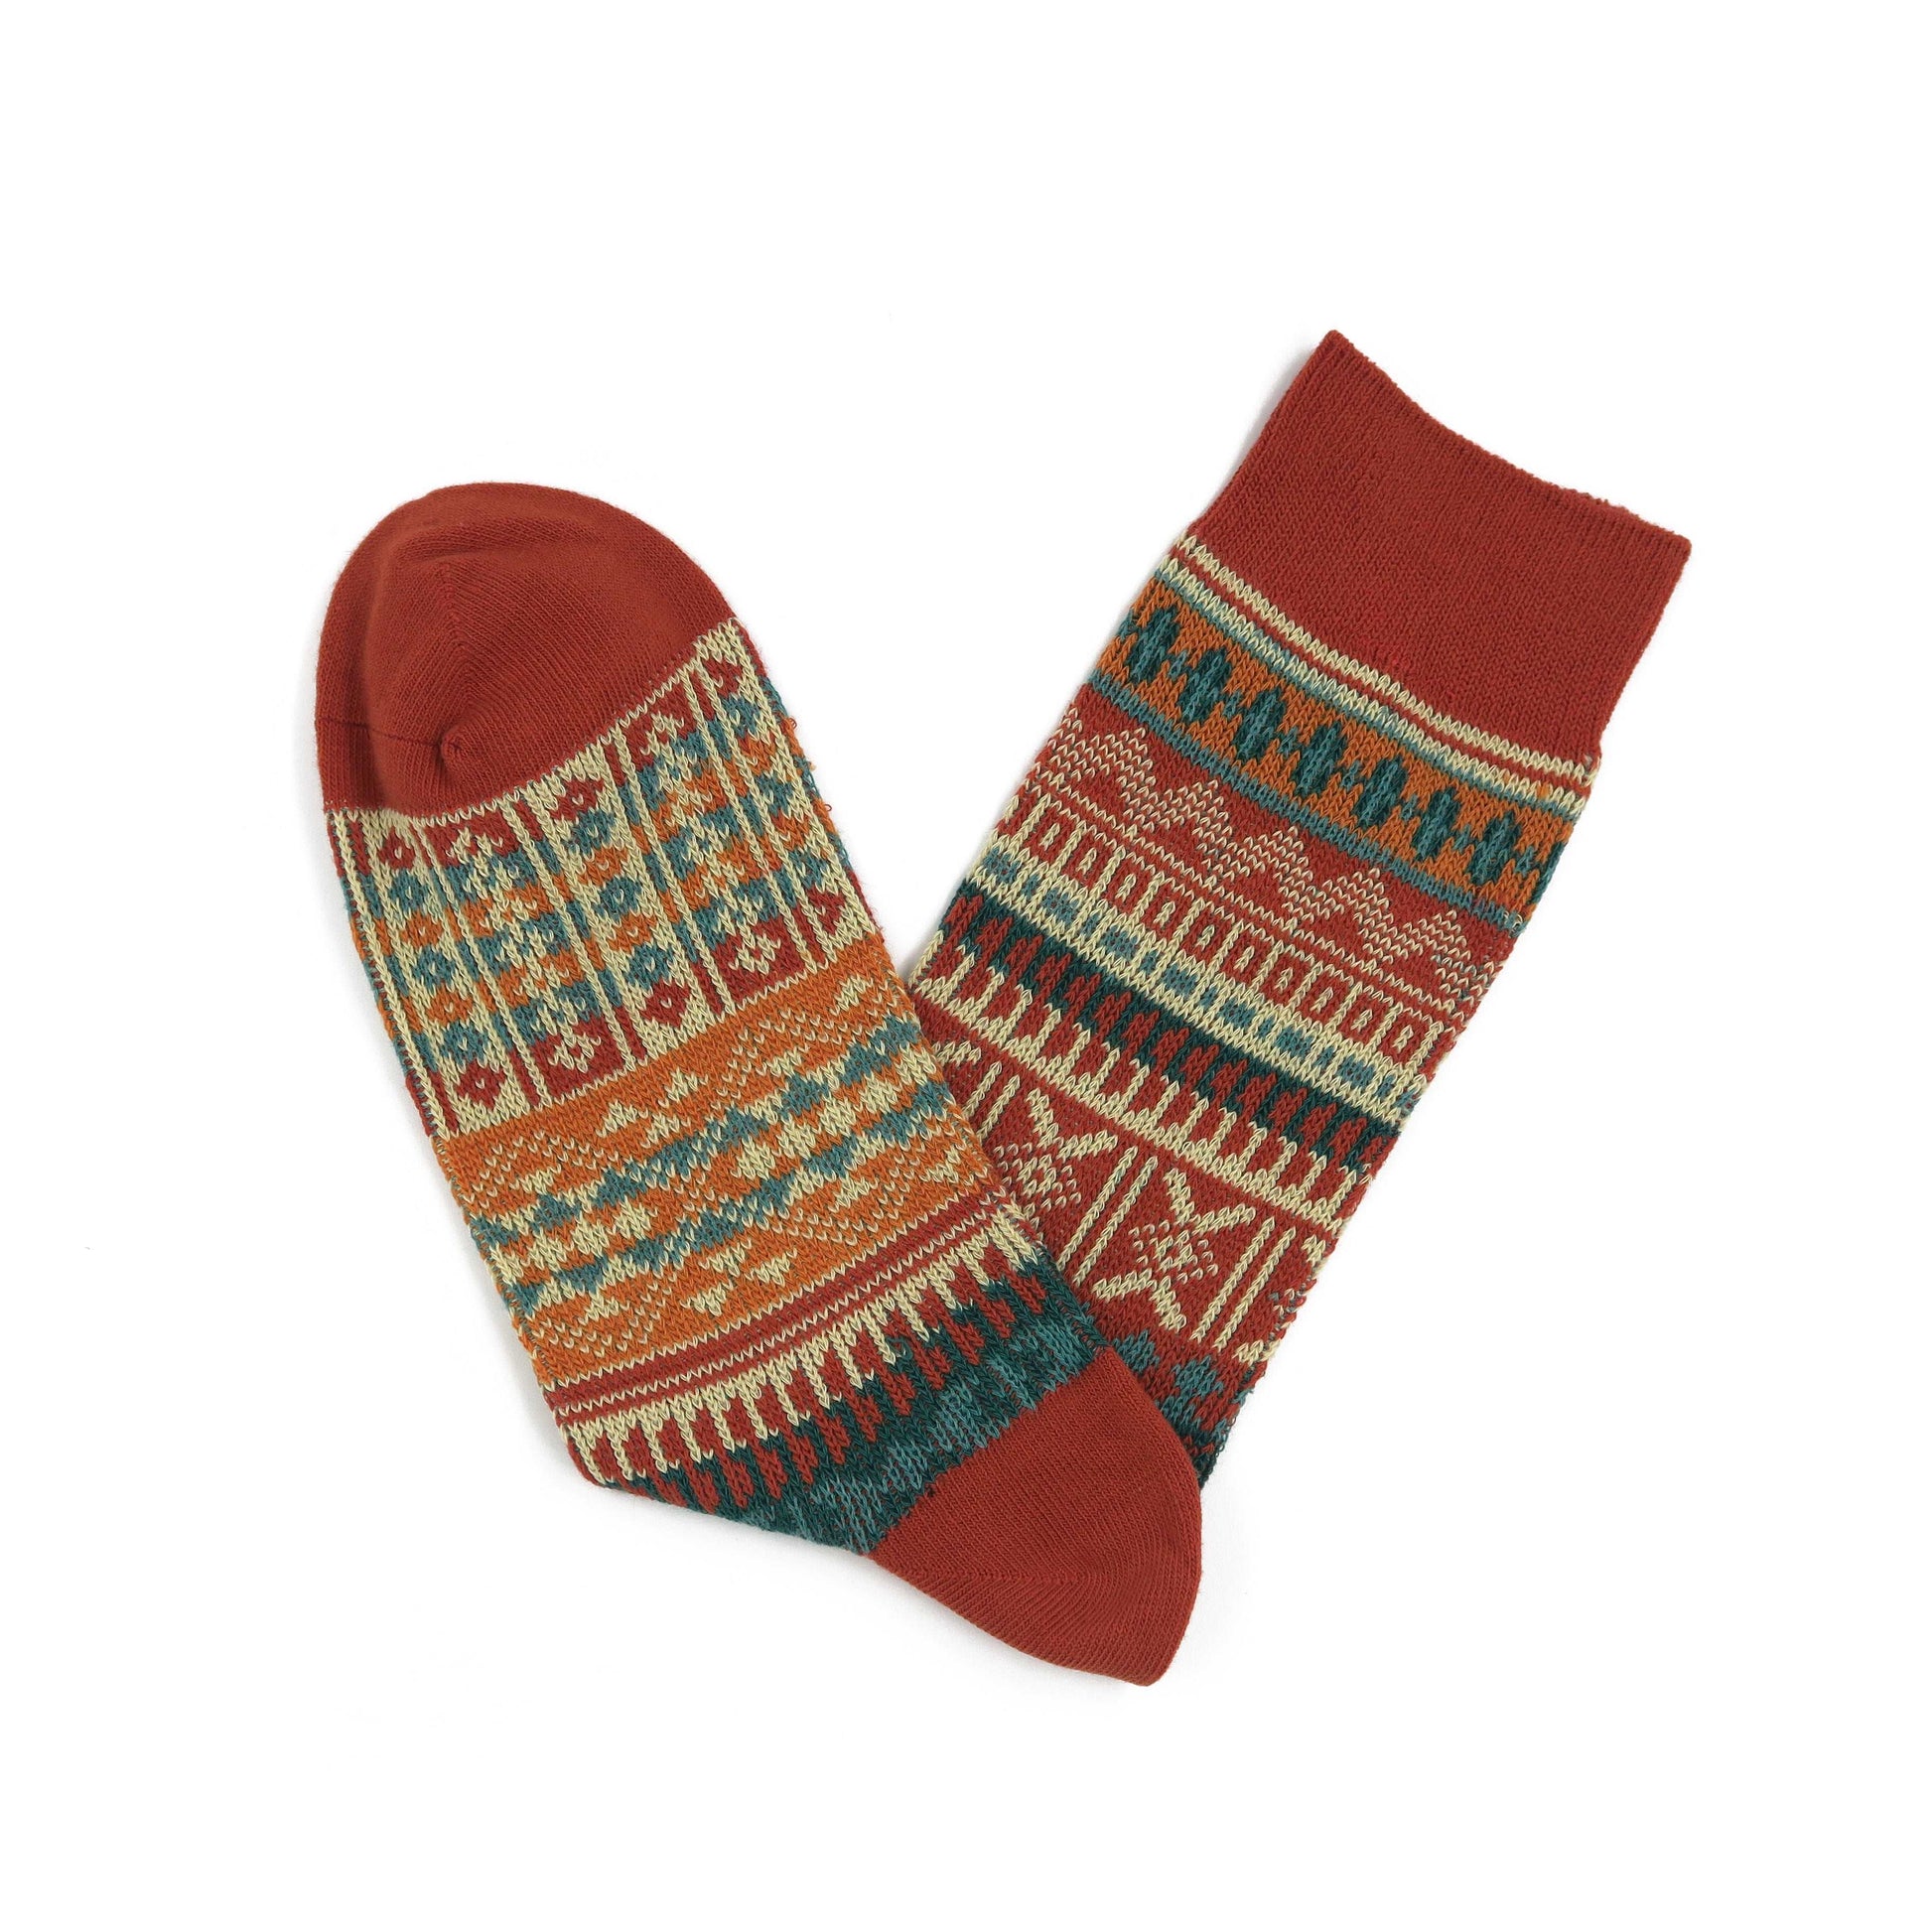 malaita socks - red tribal pattern socks - comfysocks